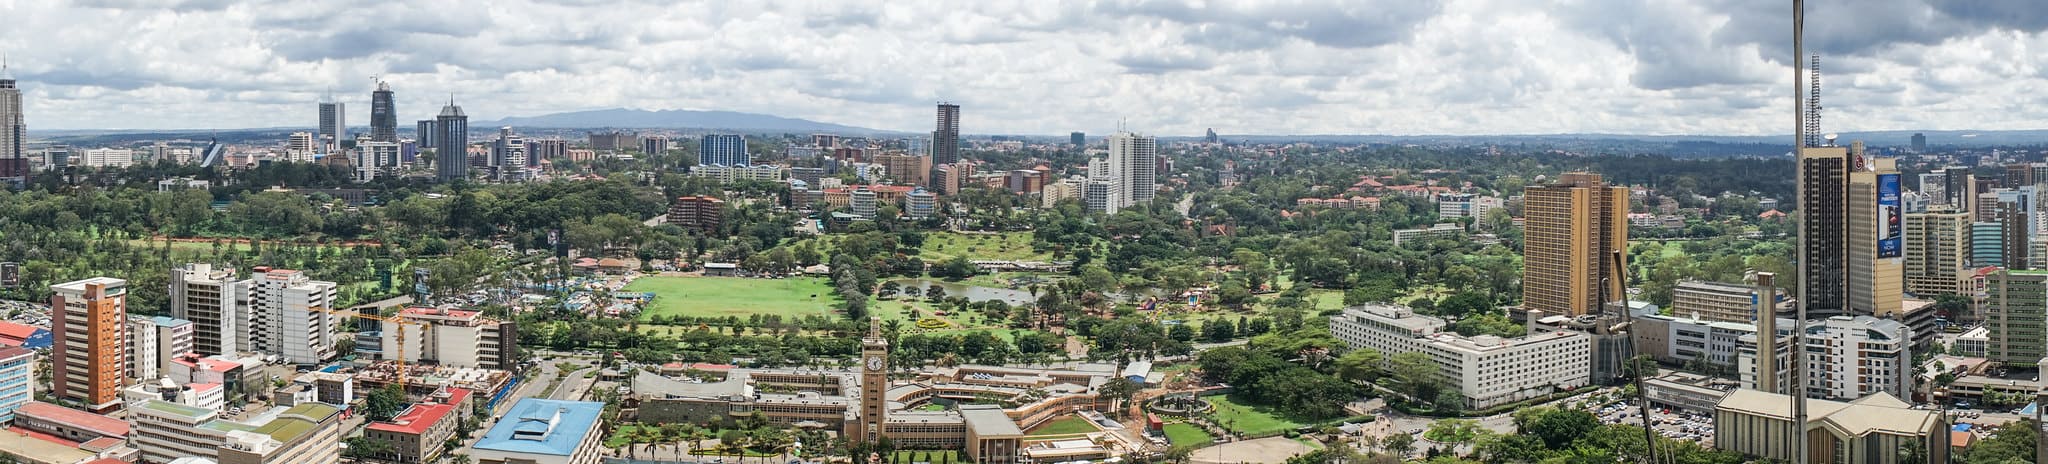 capitale del Kenya